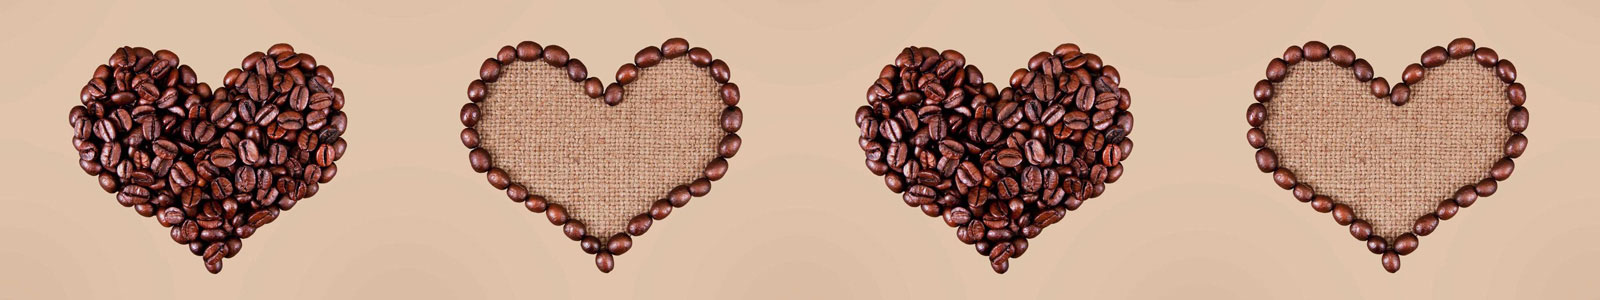 №2363 - Сердечки из зерен кофе